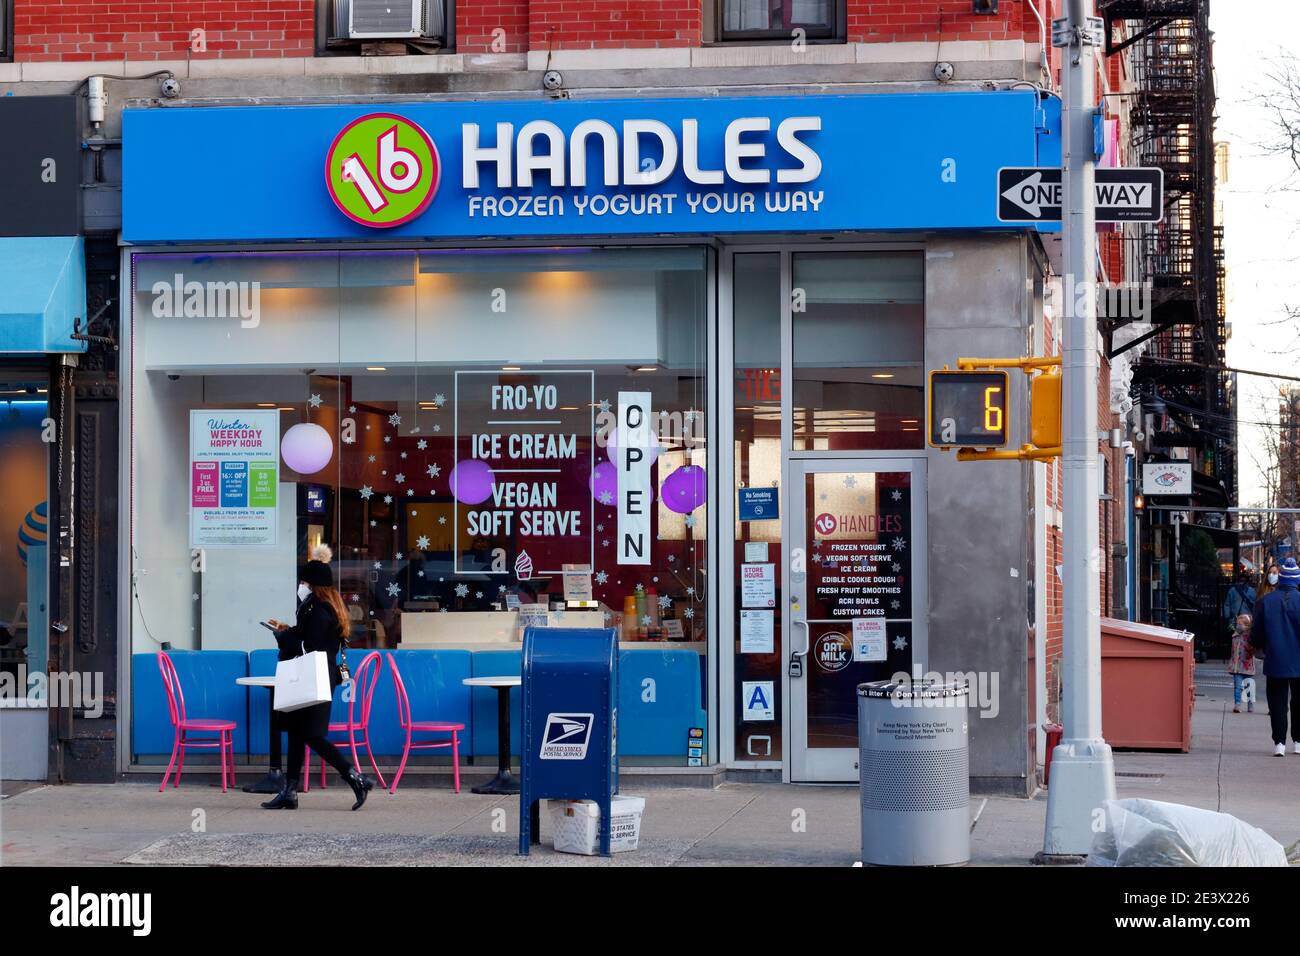 16 Handles, 178 8th Ave, New York, NYC storefront photo of a frozen yogurt shop in Manhattan's Chelsea neighborhood. Stock Photo